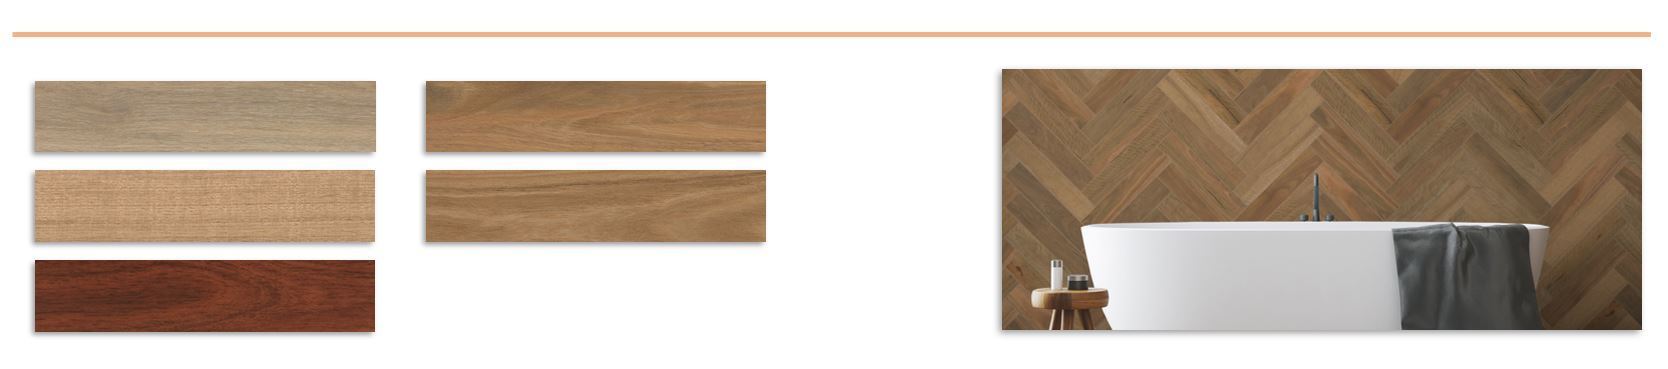 Opus Coda Timber Look Tiles 80mm x 400mm